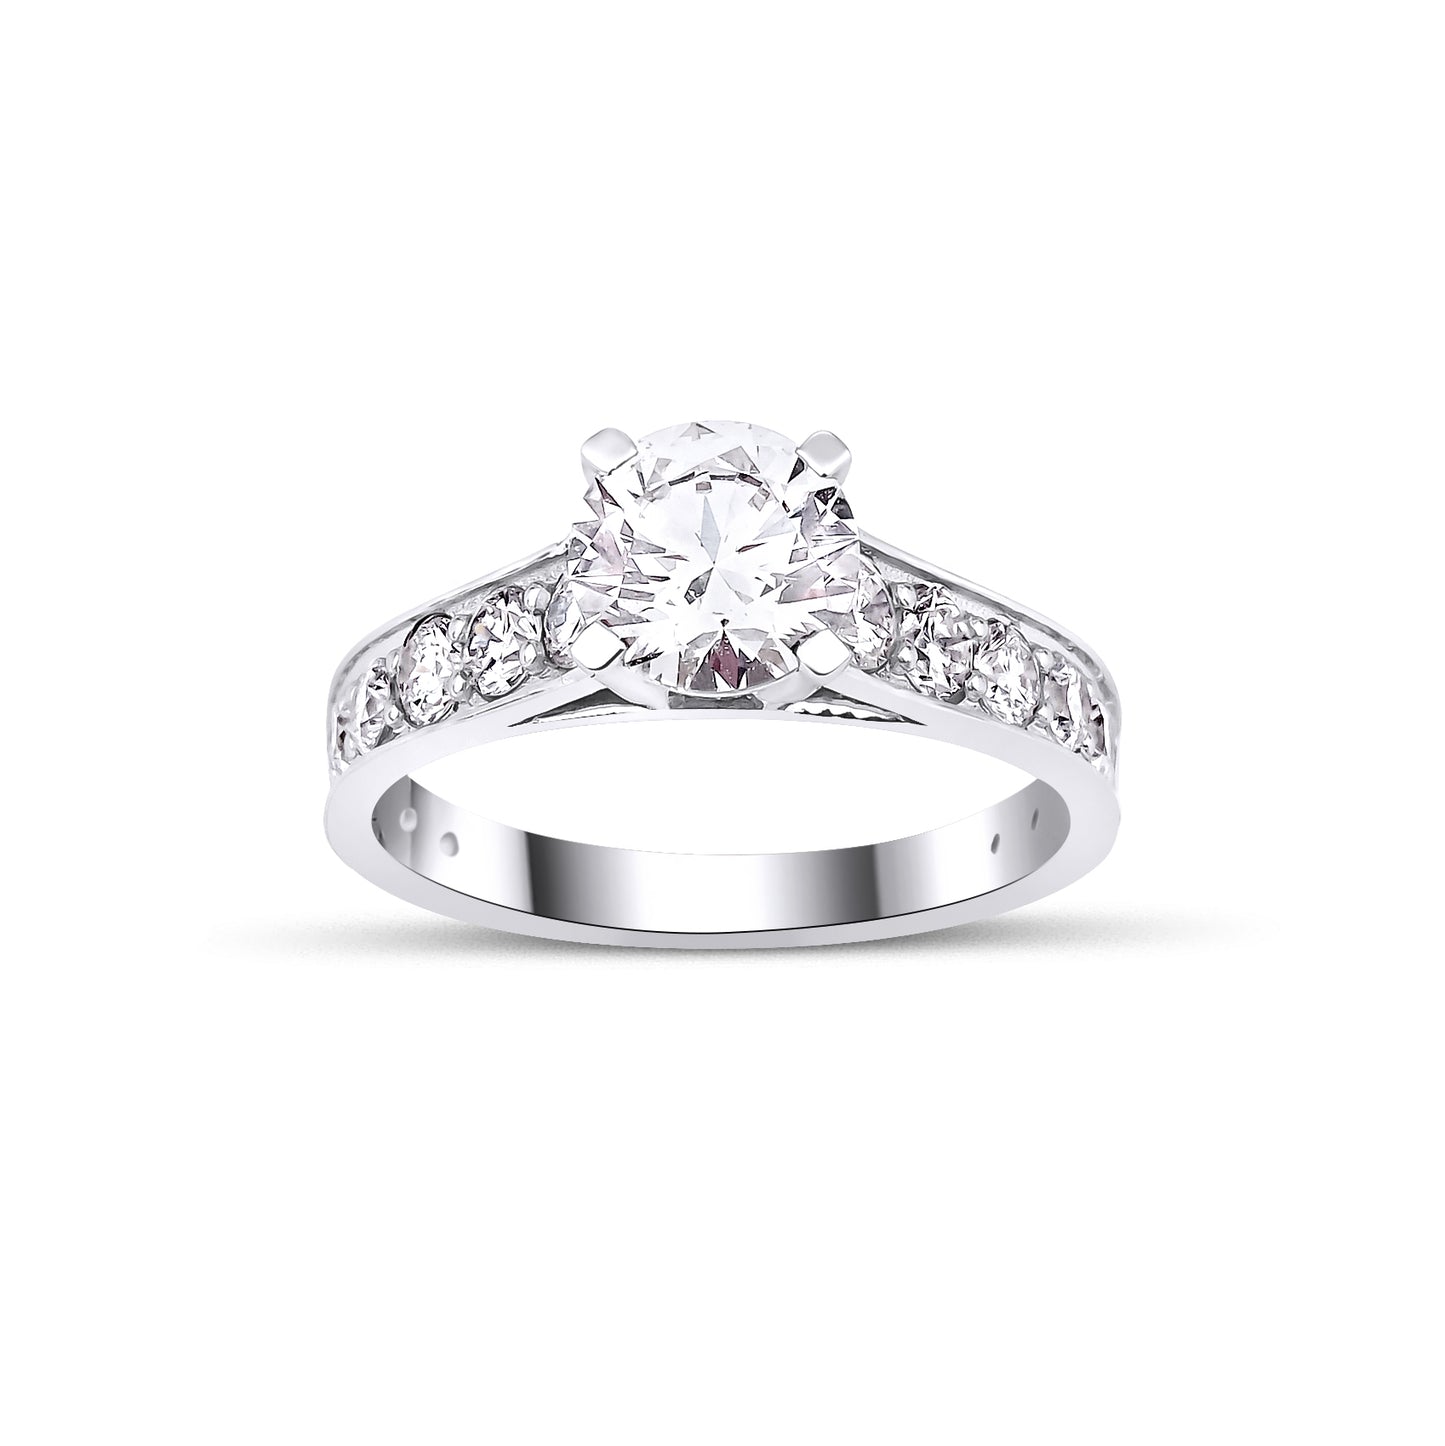 1 Carat Diamond Gold Engagement Ring, Diamond Wedding Band, Diamond Promise Ring, Handmade Ring, IGI Certified Ring, Gift For Her